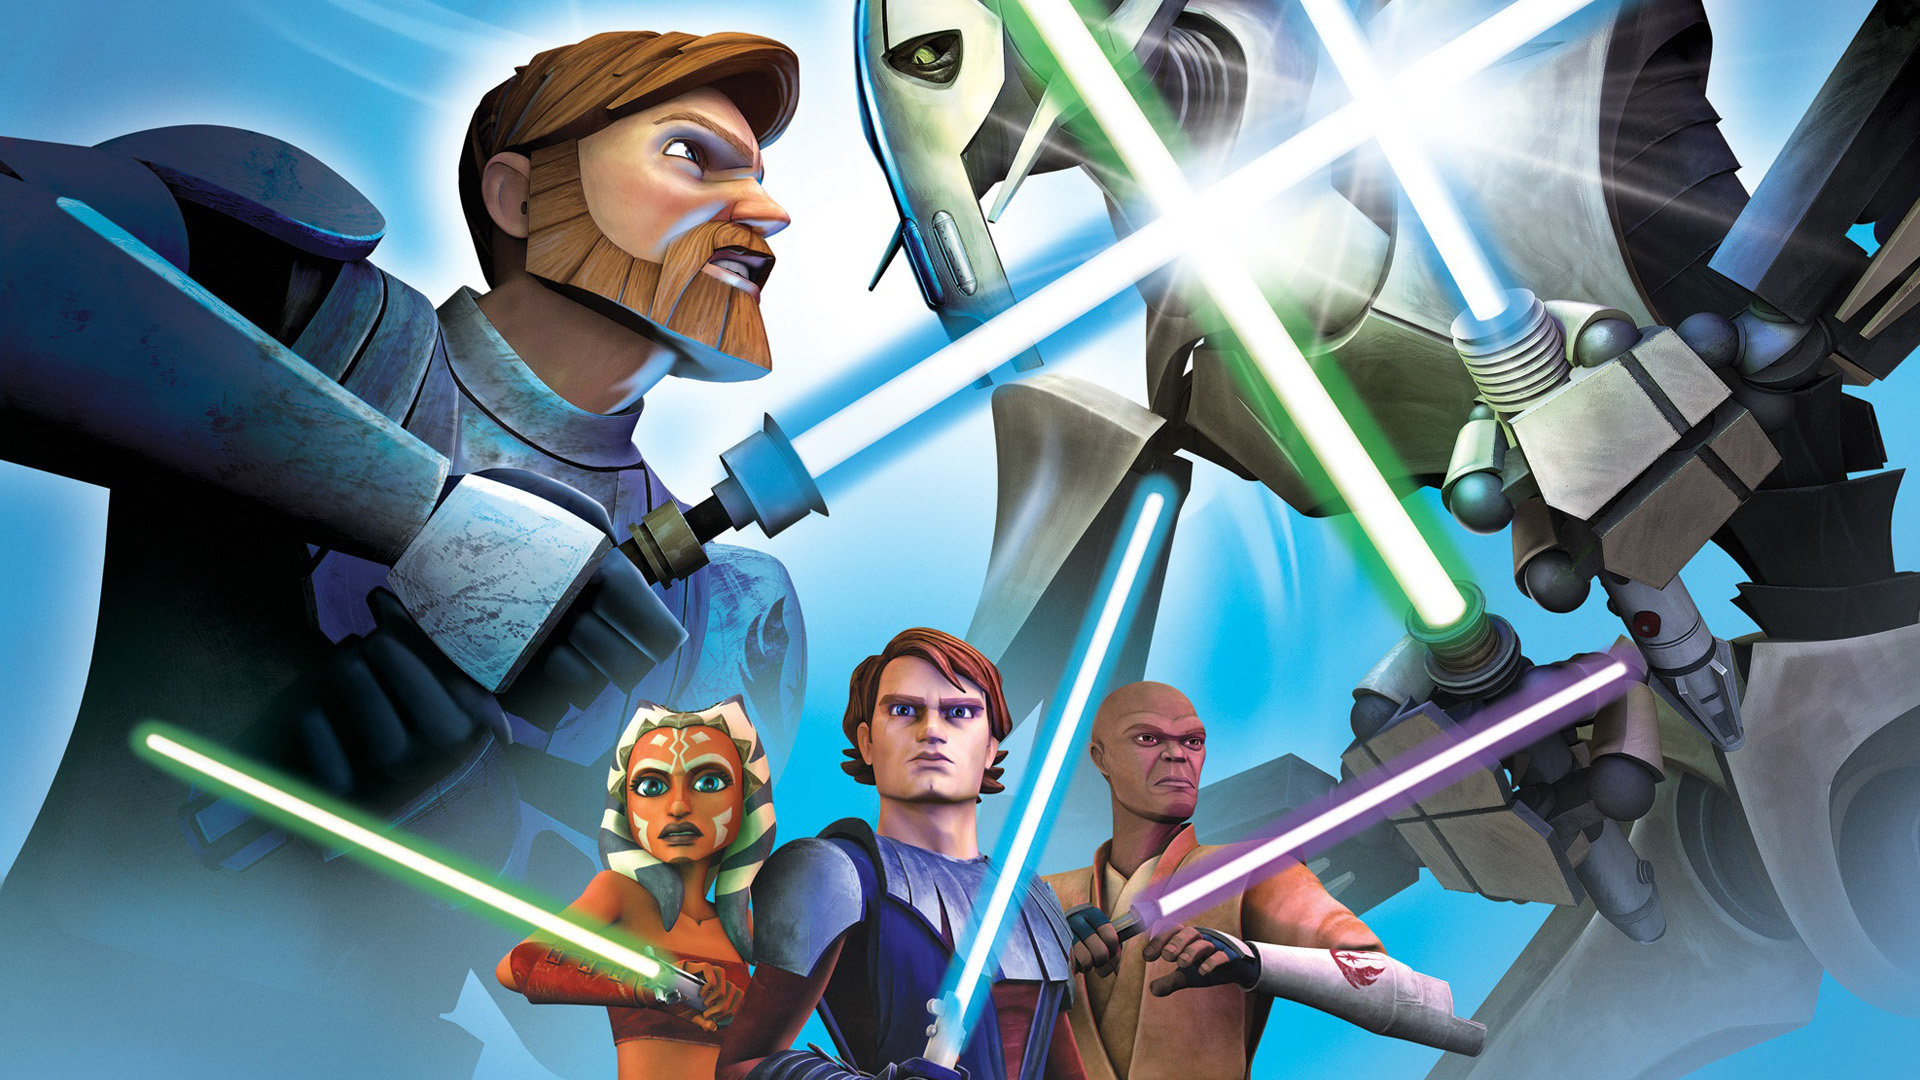 Star Wars: The Clone Wars: The adventures of Anakin Skywalker, Obi-Wan Kenobi, Yoda, Ahsoka Tano, SW. 1920x1080 Full HD Wallpaper.